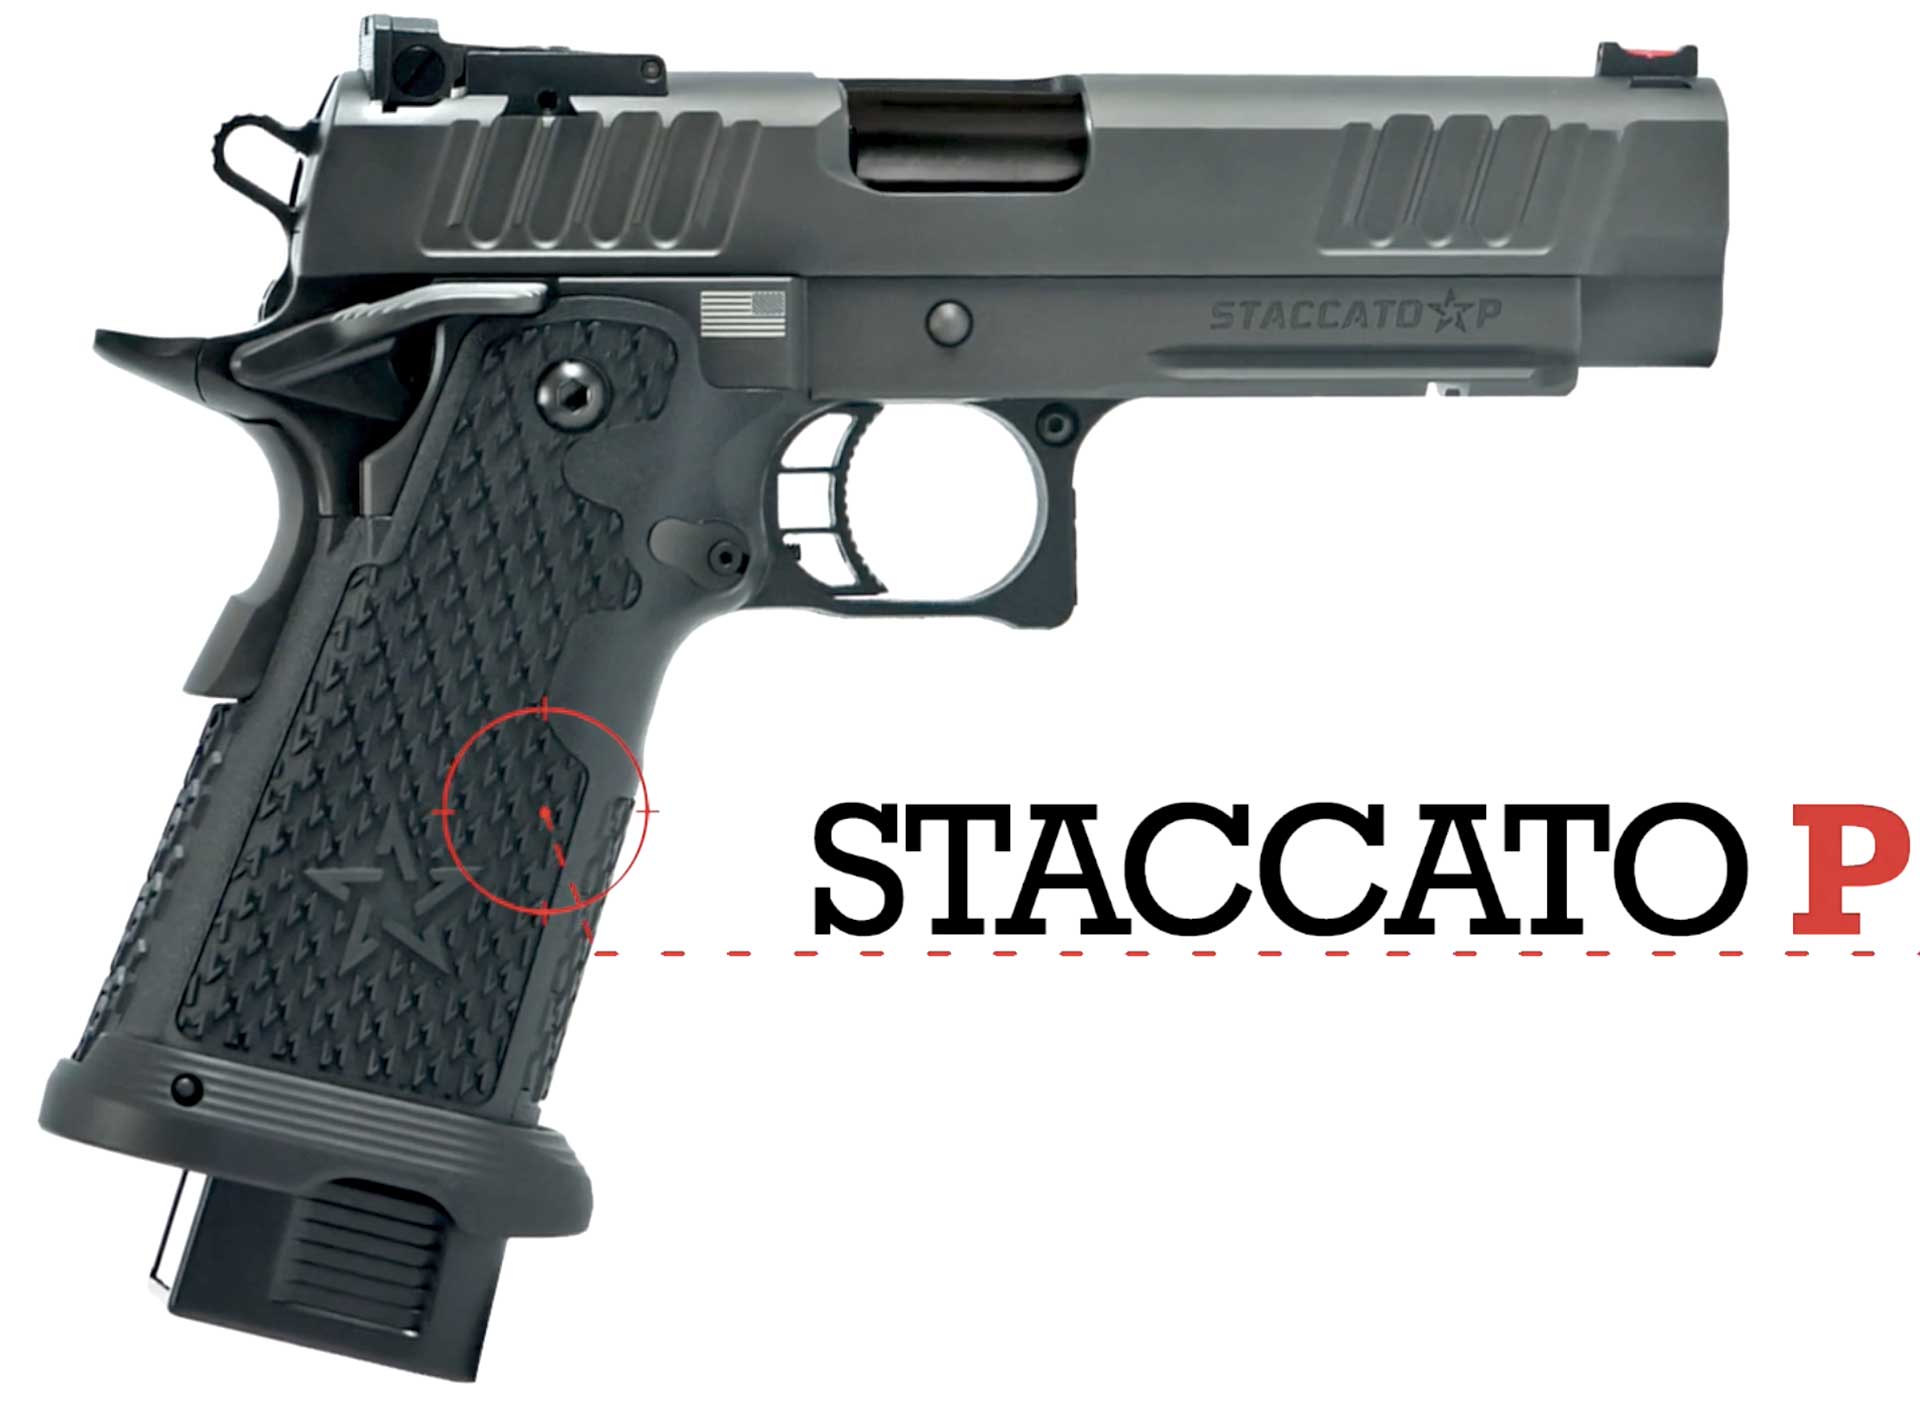 right side black pistol handgun metal plastic text on image noting "staccato p"